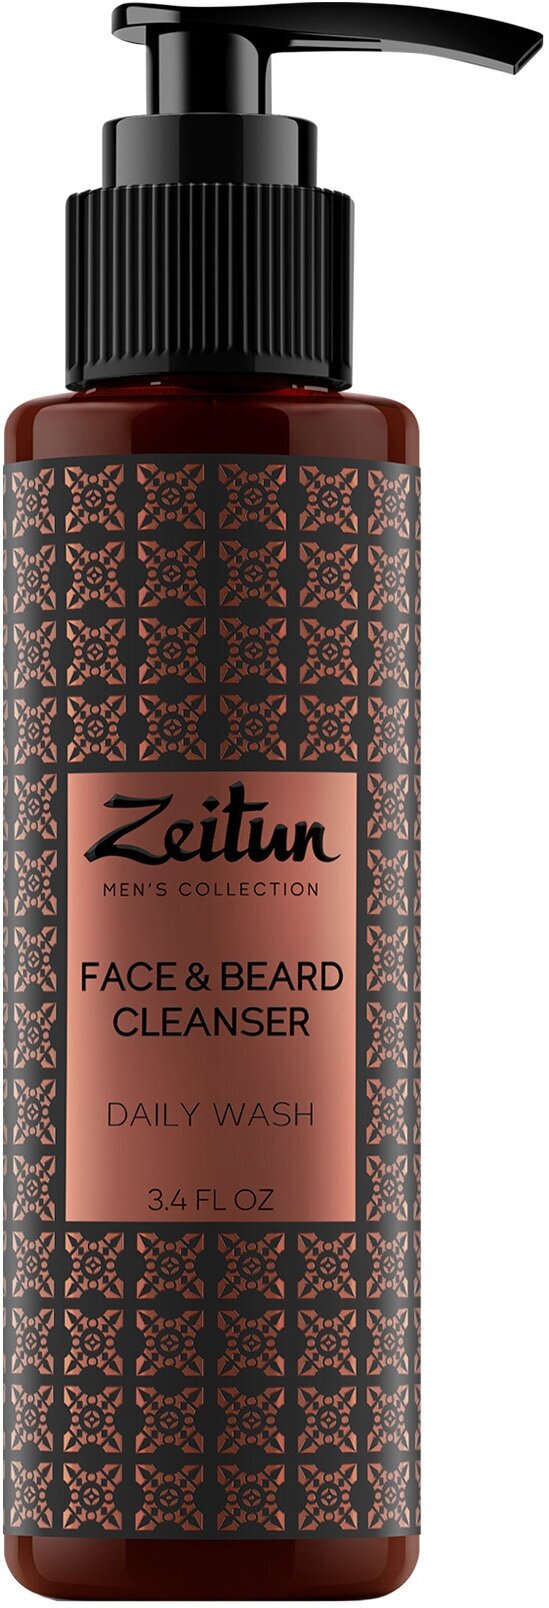 Очищающий гель для душа и умывания Zeitun Men's Collection Face Beard Cleanser /100 мл/гр.